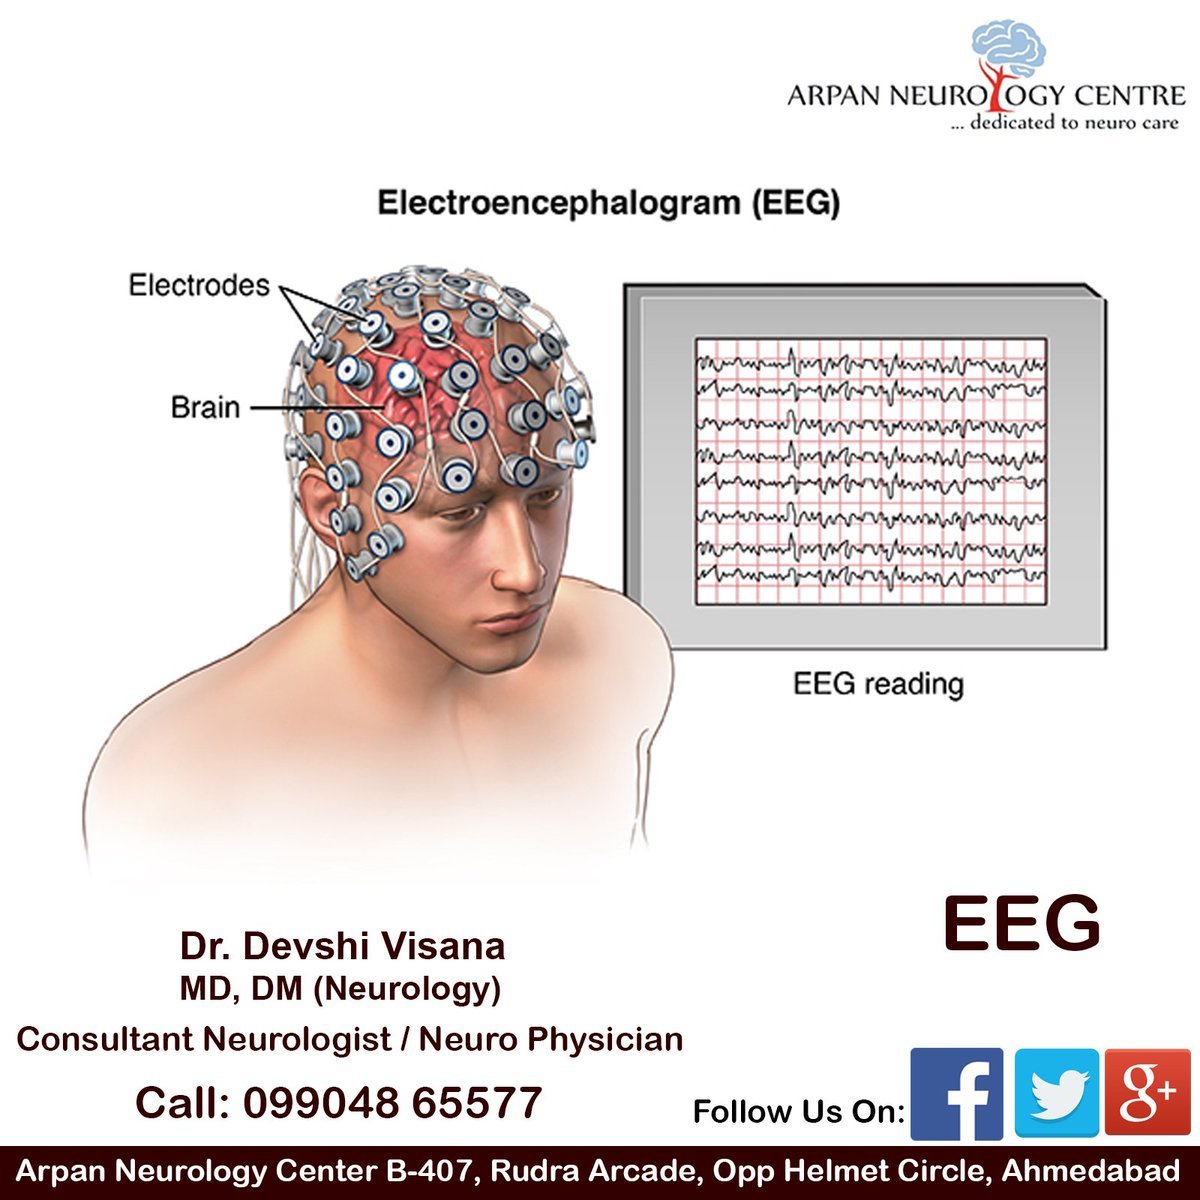 Dr. Devshi Visana on Twitter: " An electroencephalogram ...